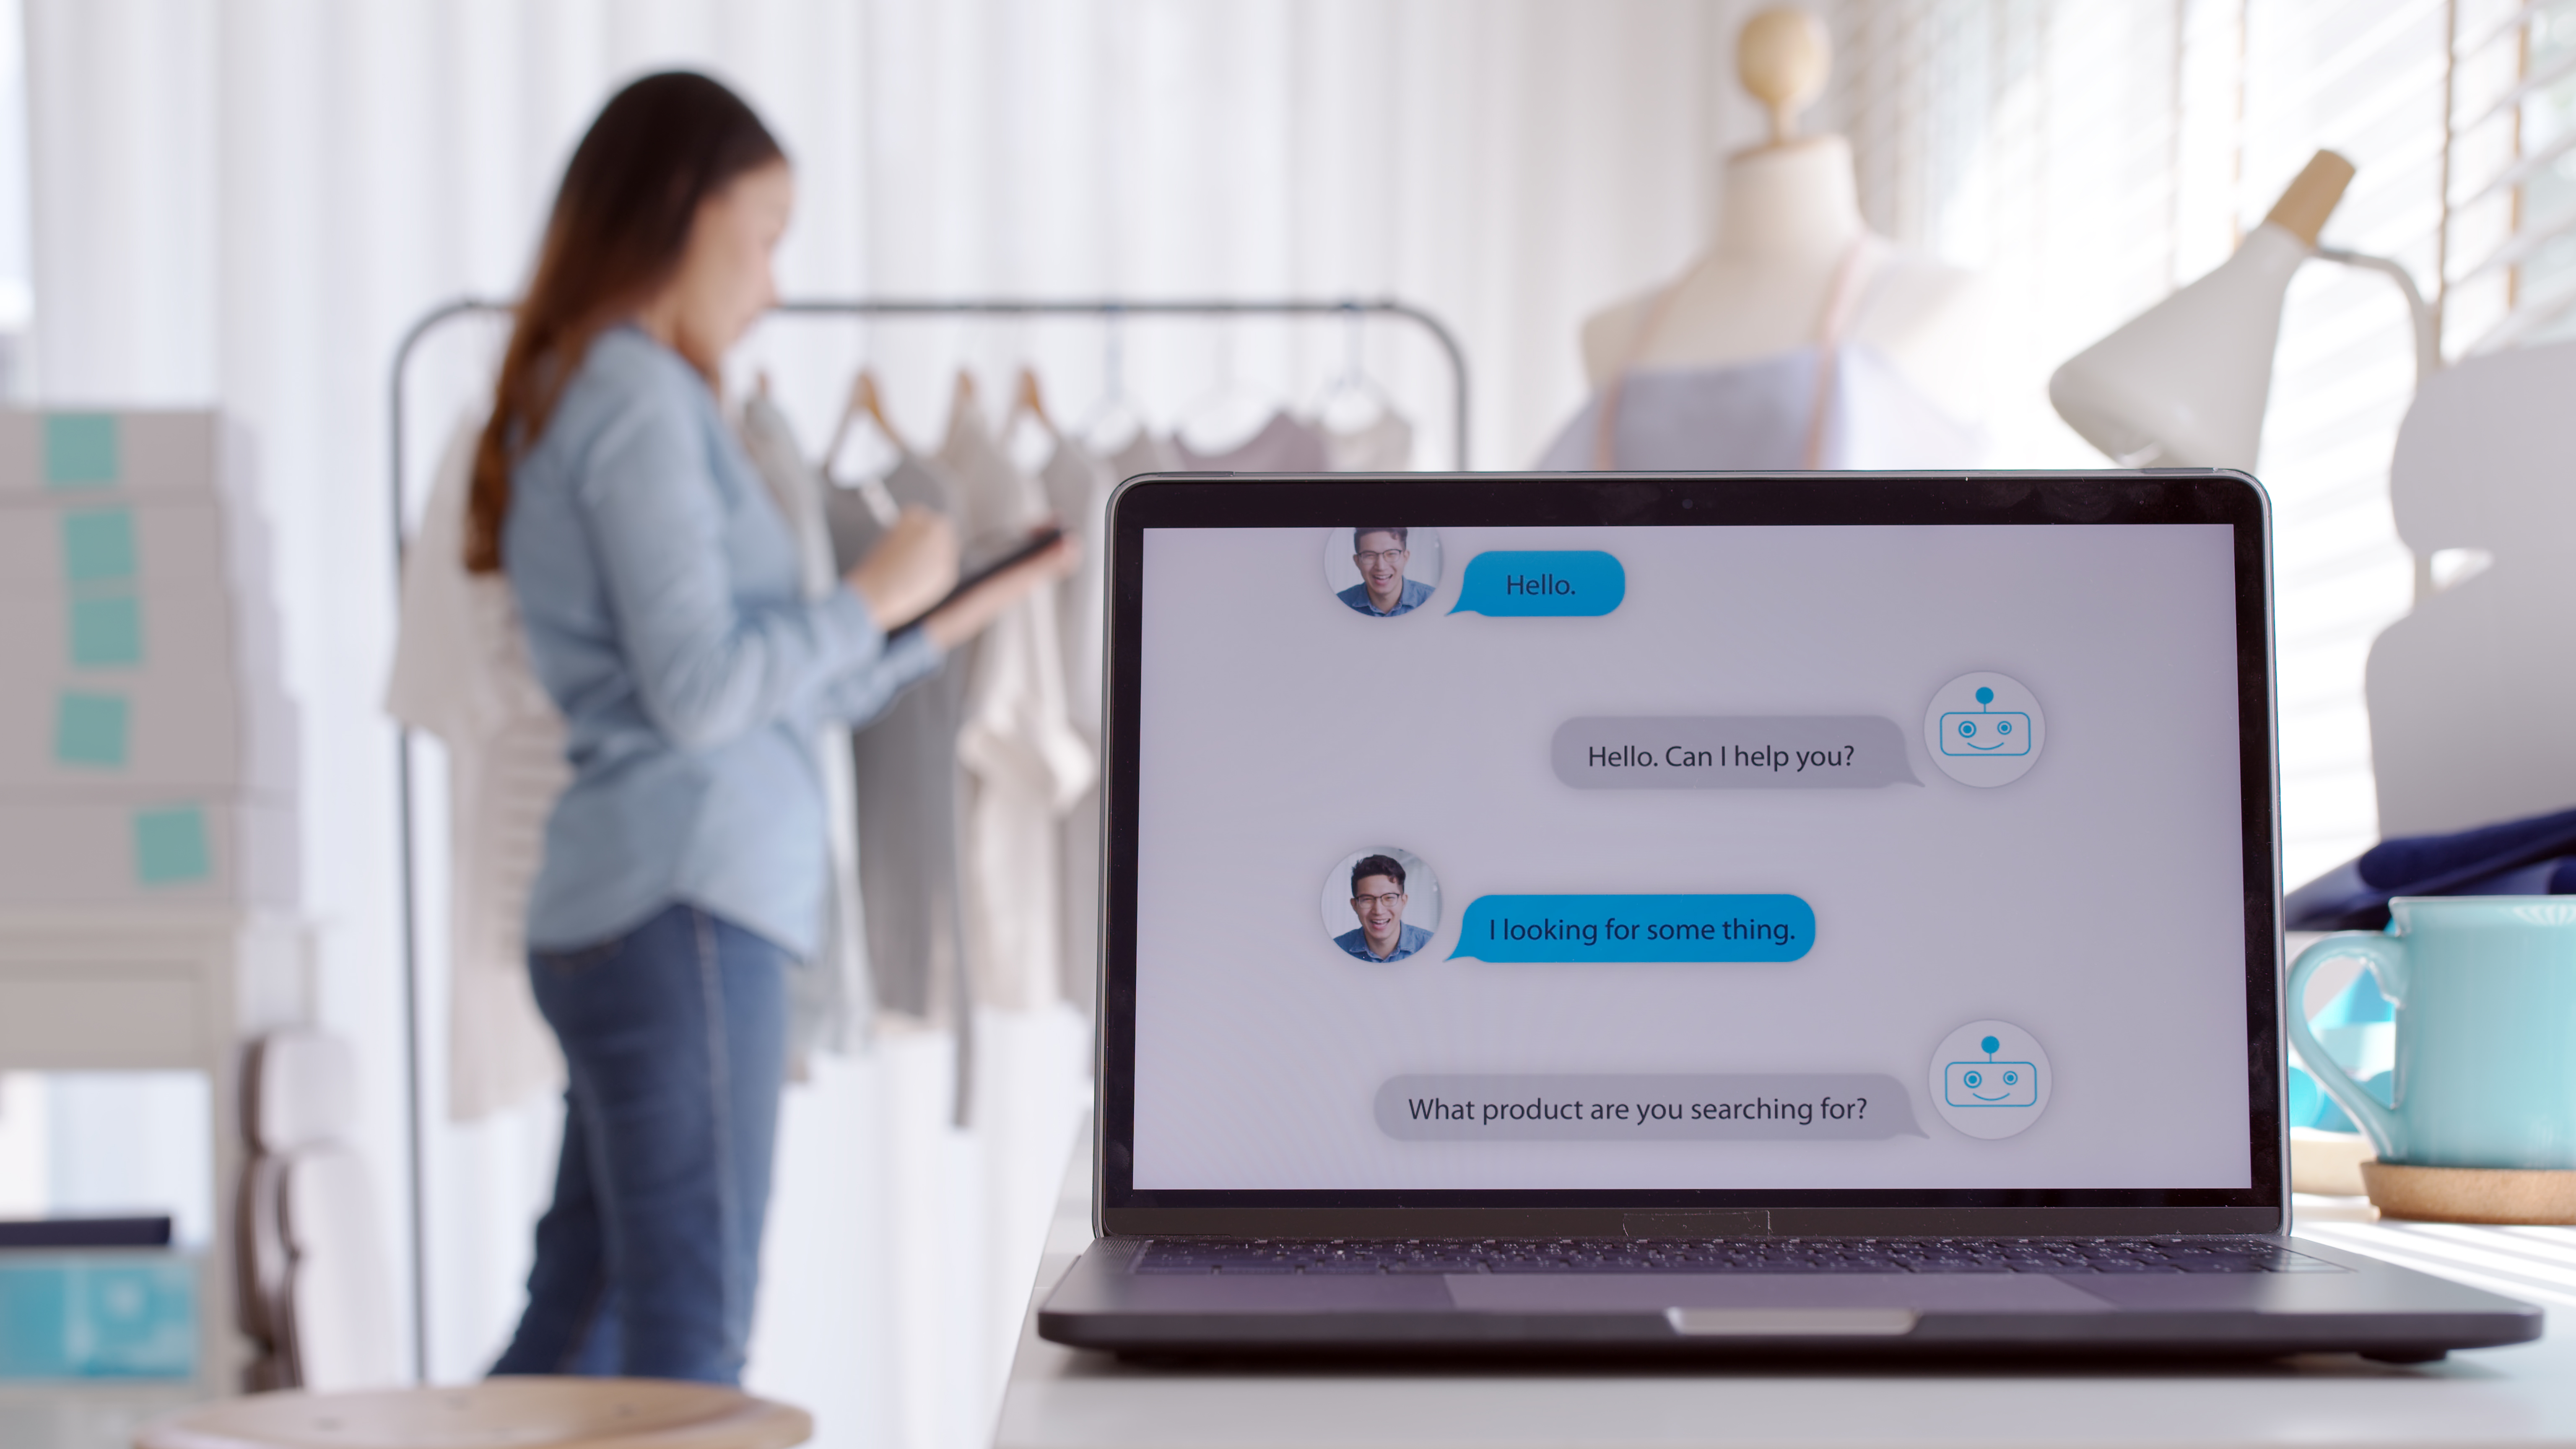 chatbot-conversation-on-laptop-screen-app-interfac-2021-12-09-19-43-39-utc